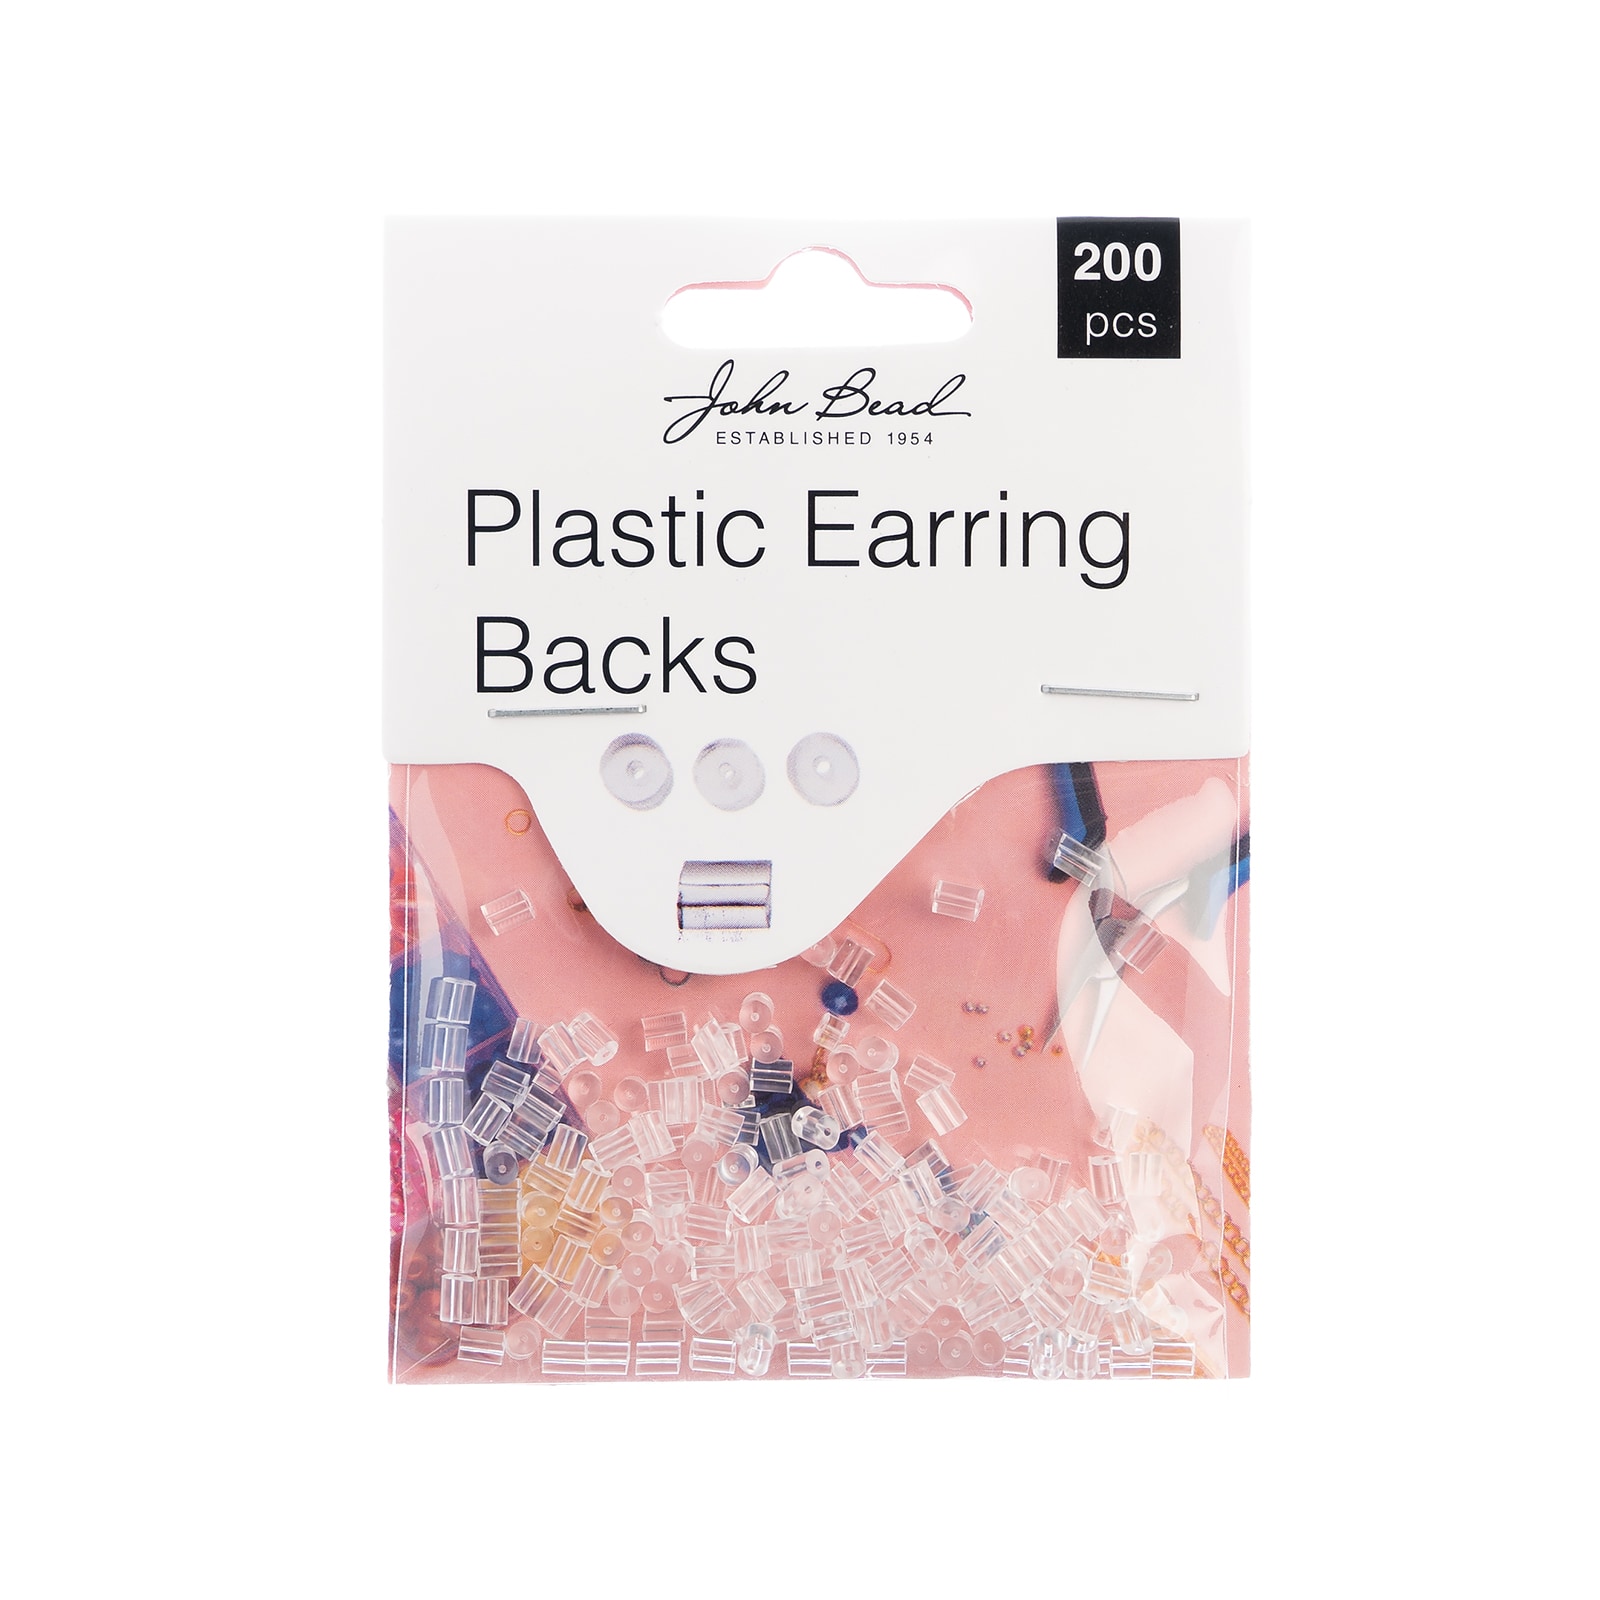 Plastic Earring Backs, Clear Earring Backs